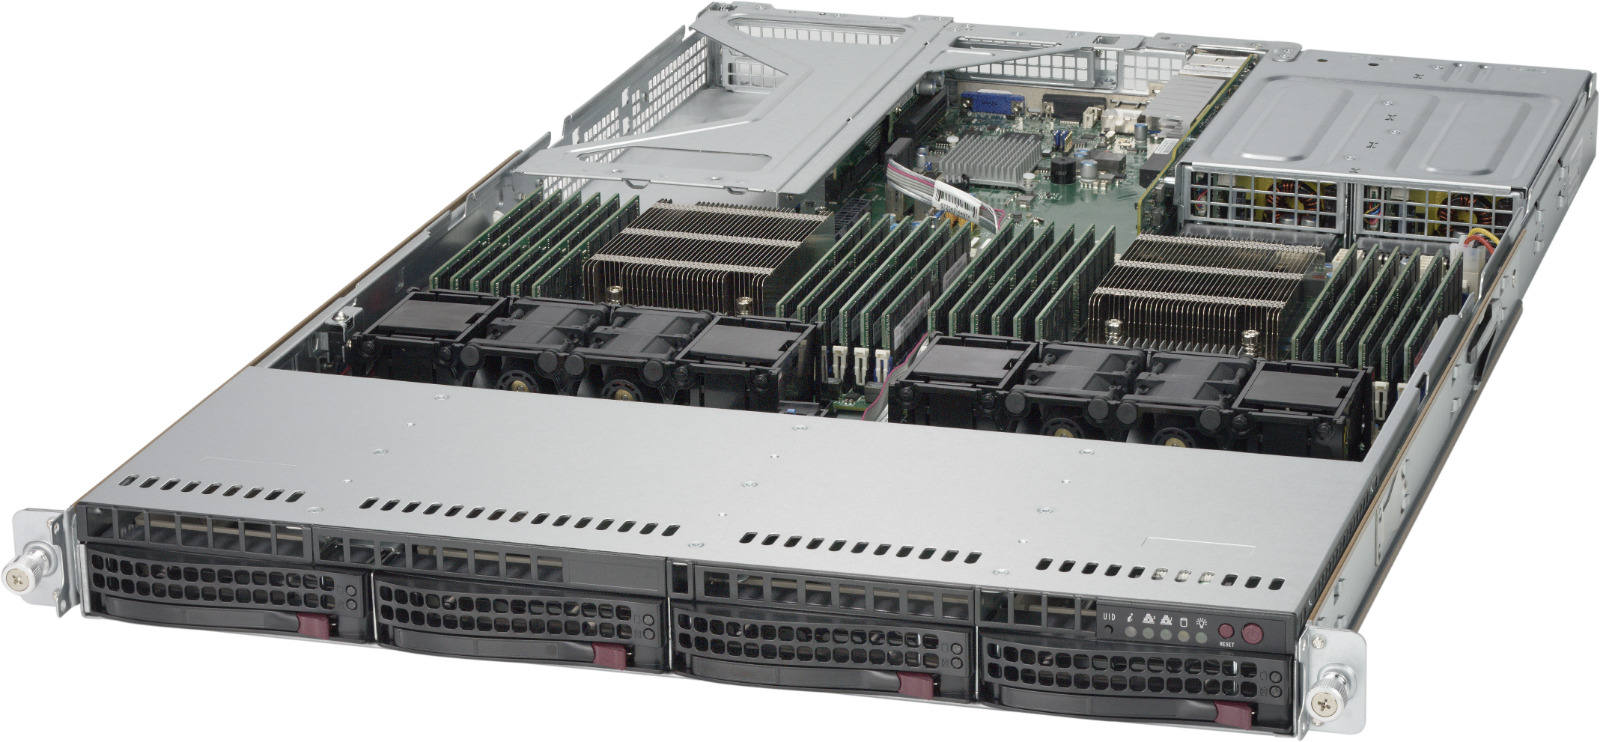 1U Supermicro Server X10DRU-i+ 2x Xeon 18 Cores (Total 36) 64GB 4x 10GBE-T 2PS